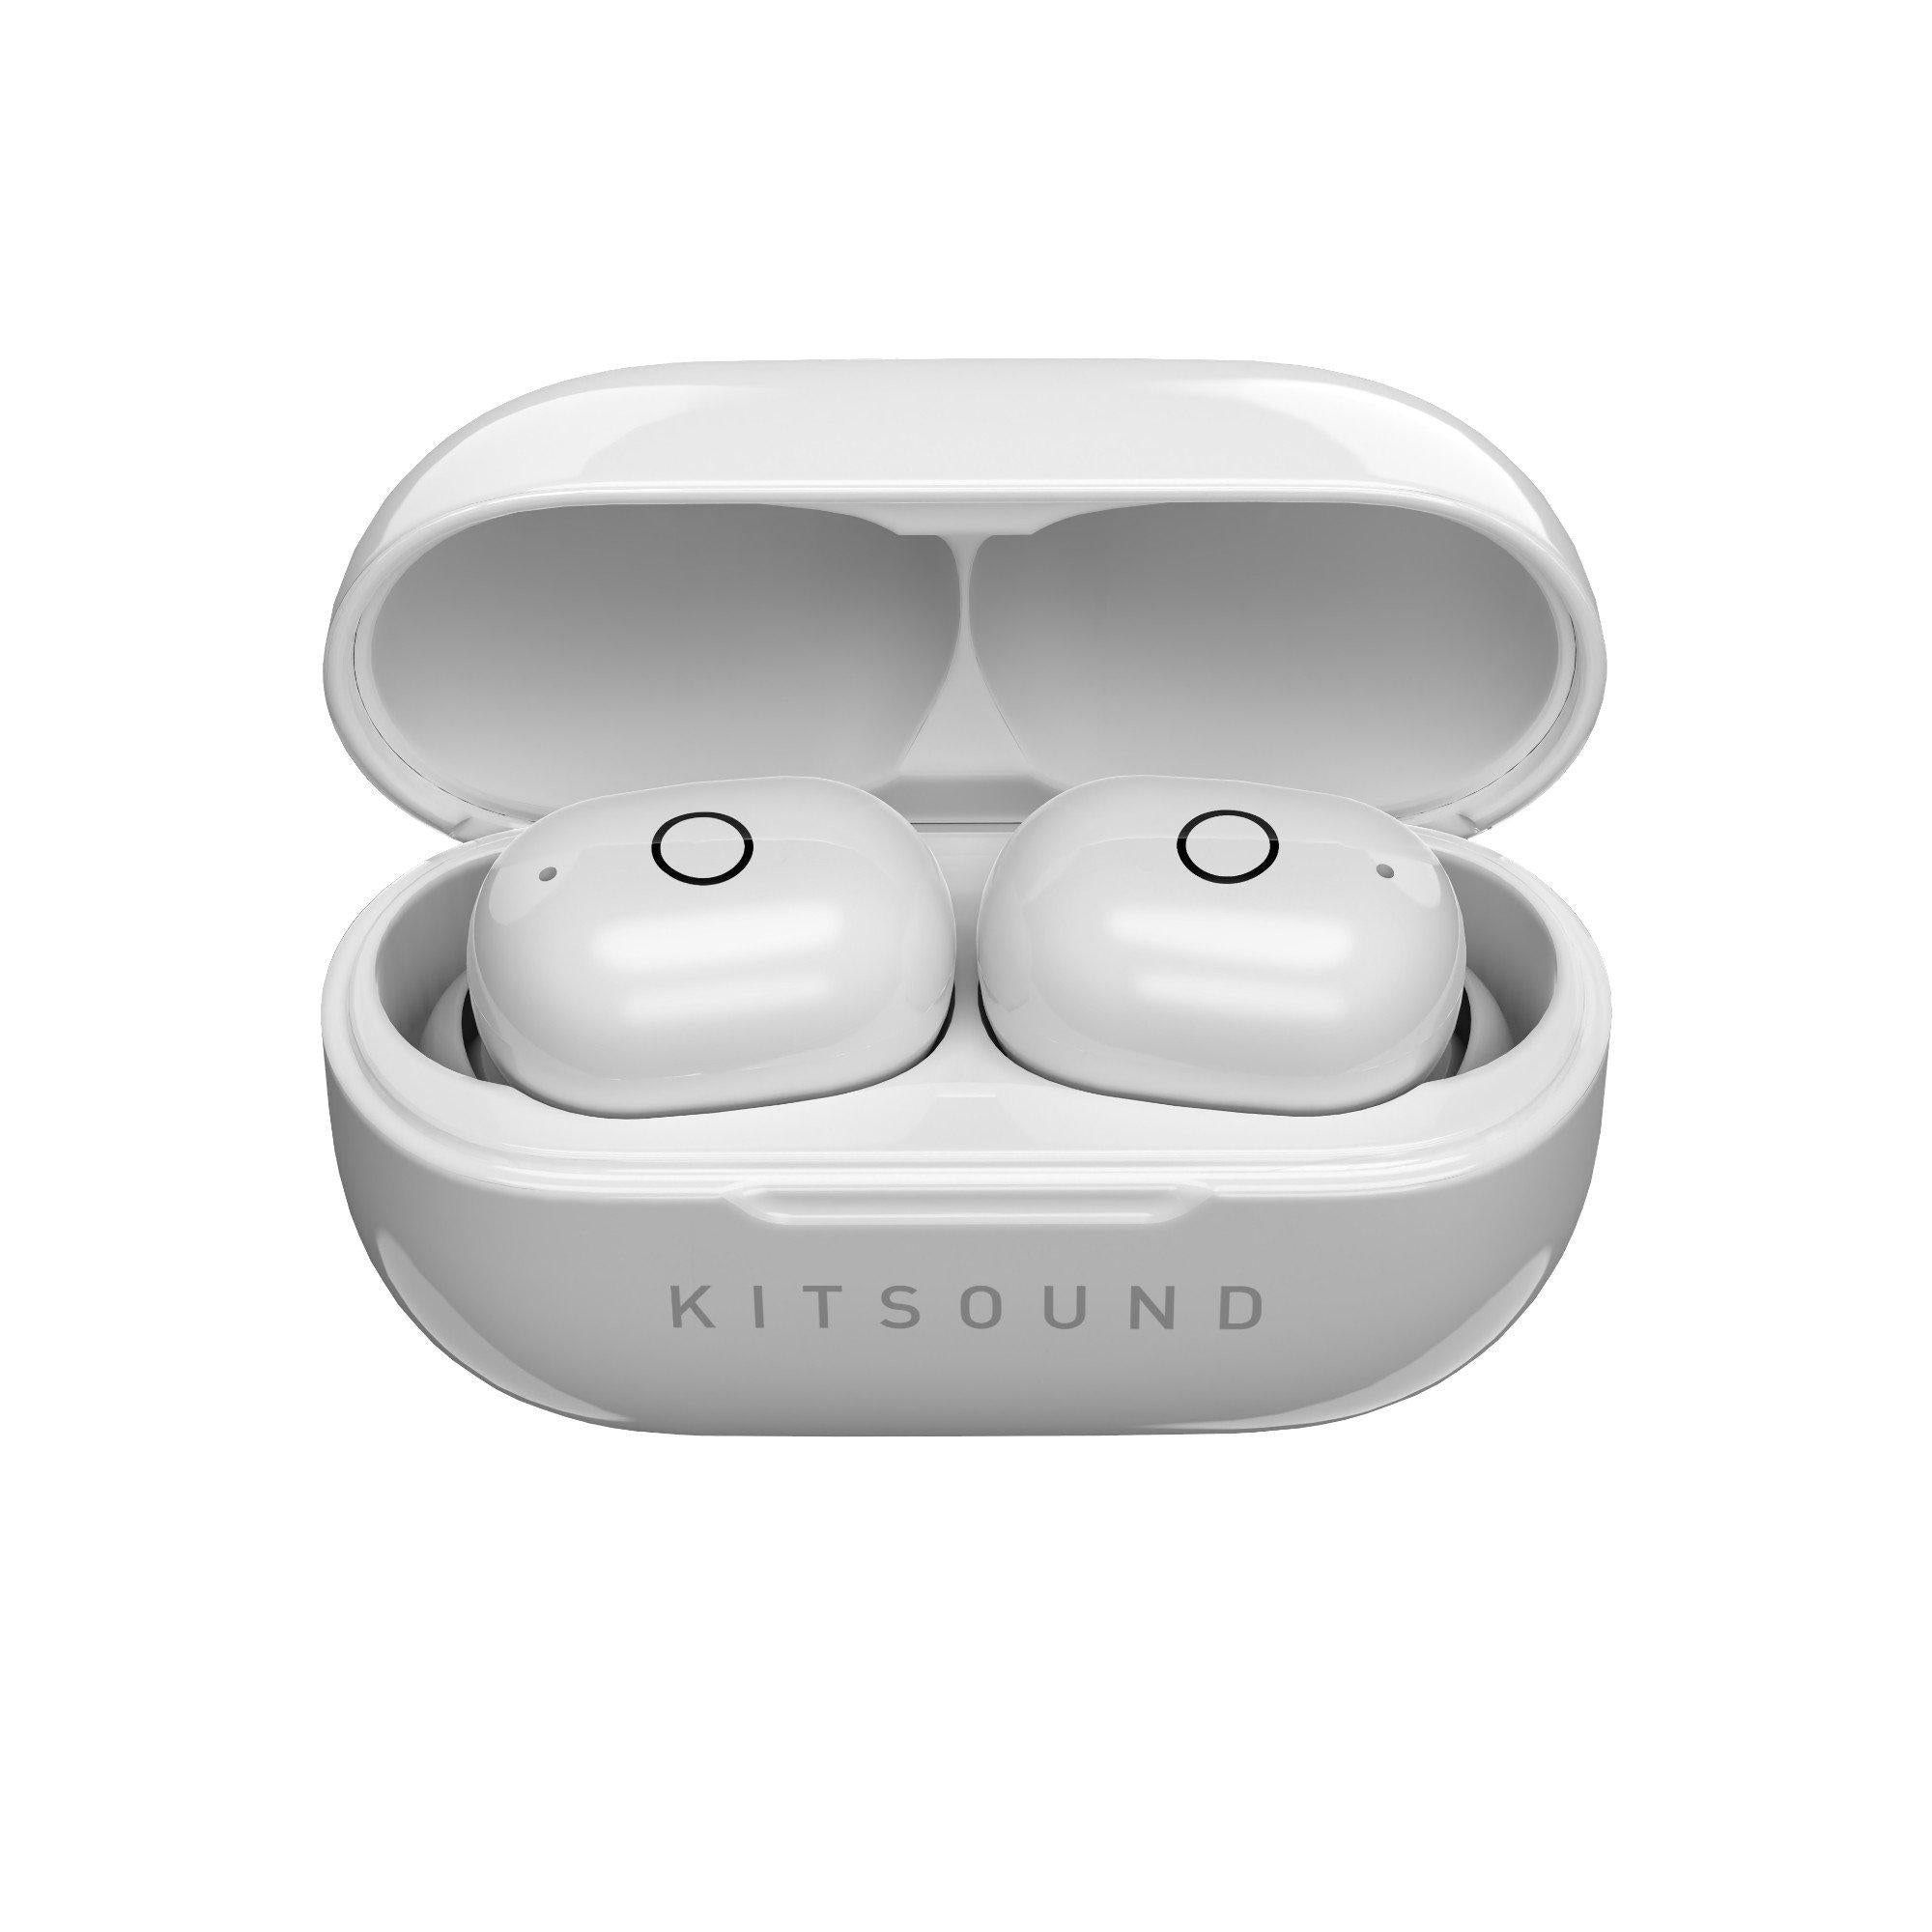 KitSound Edge 20 True Wireless Bluetooth Earbuds - White - Refurbished Excellent